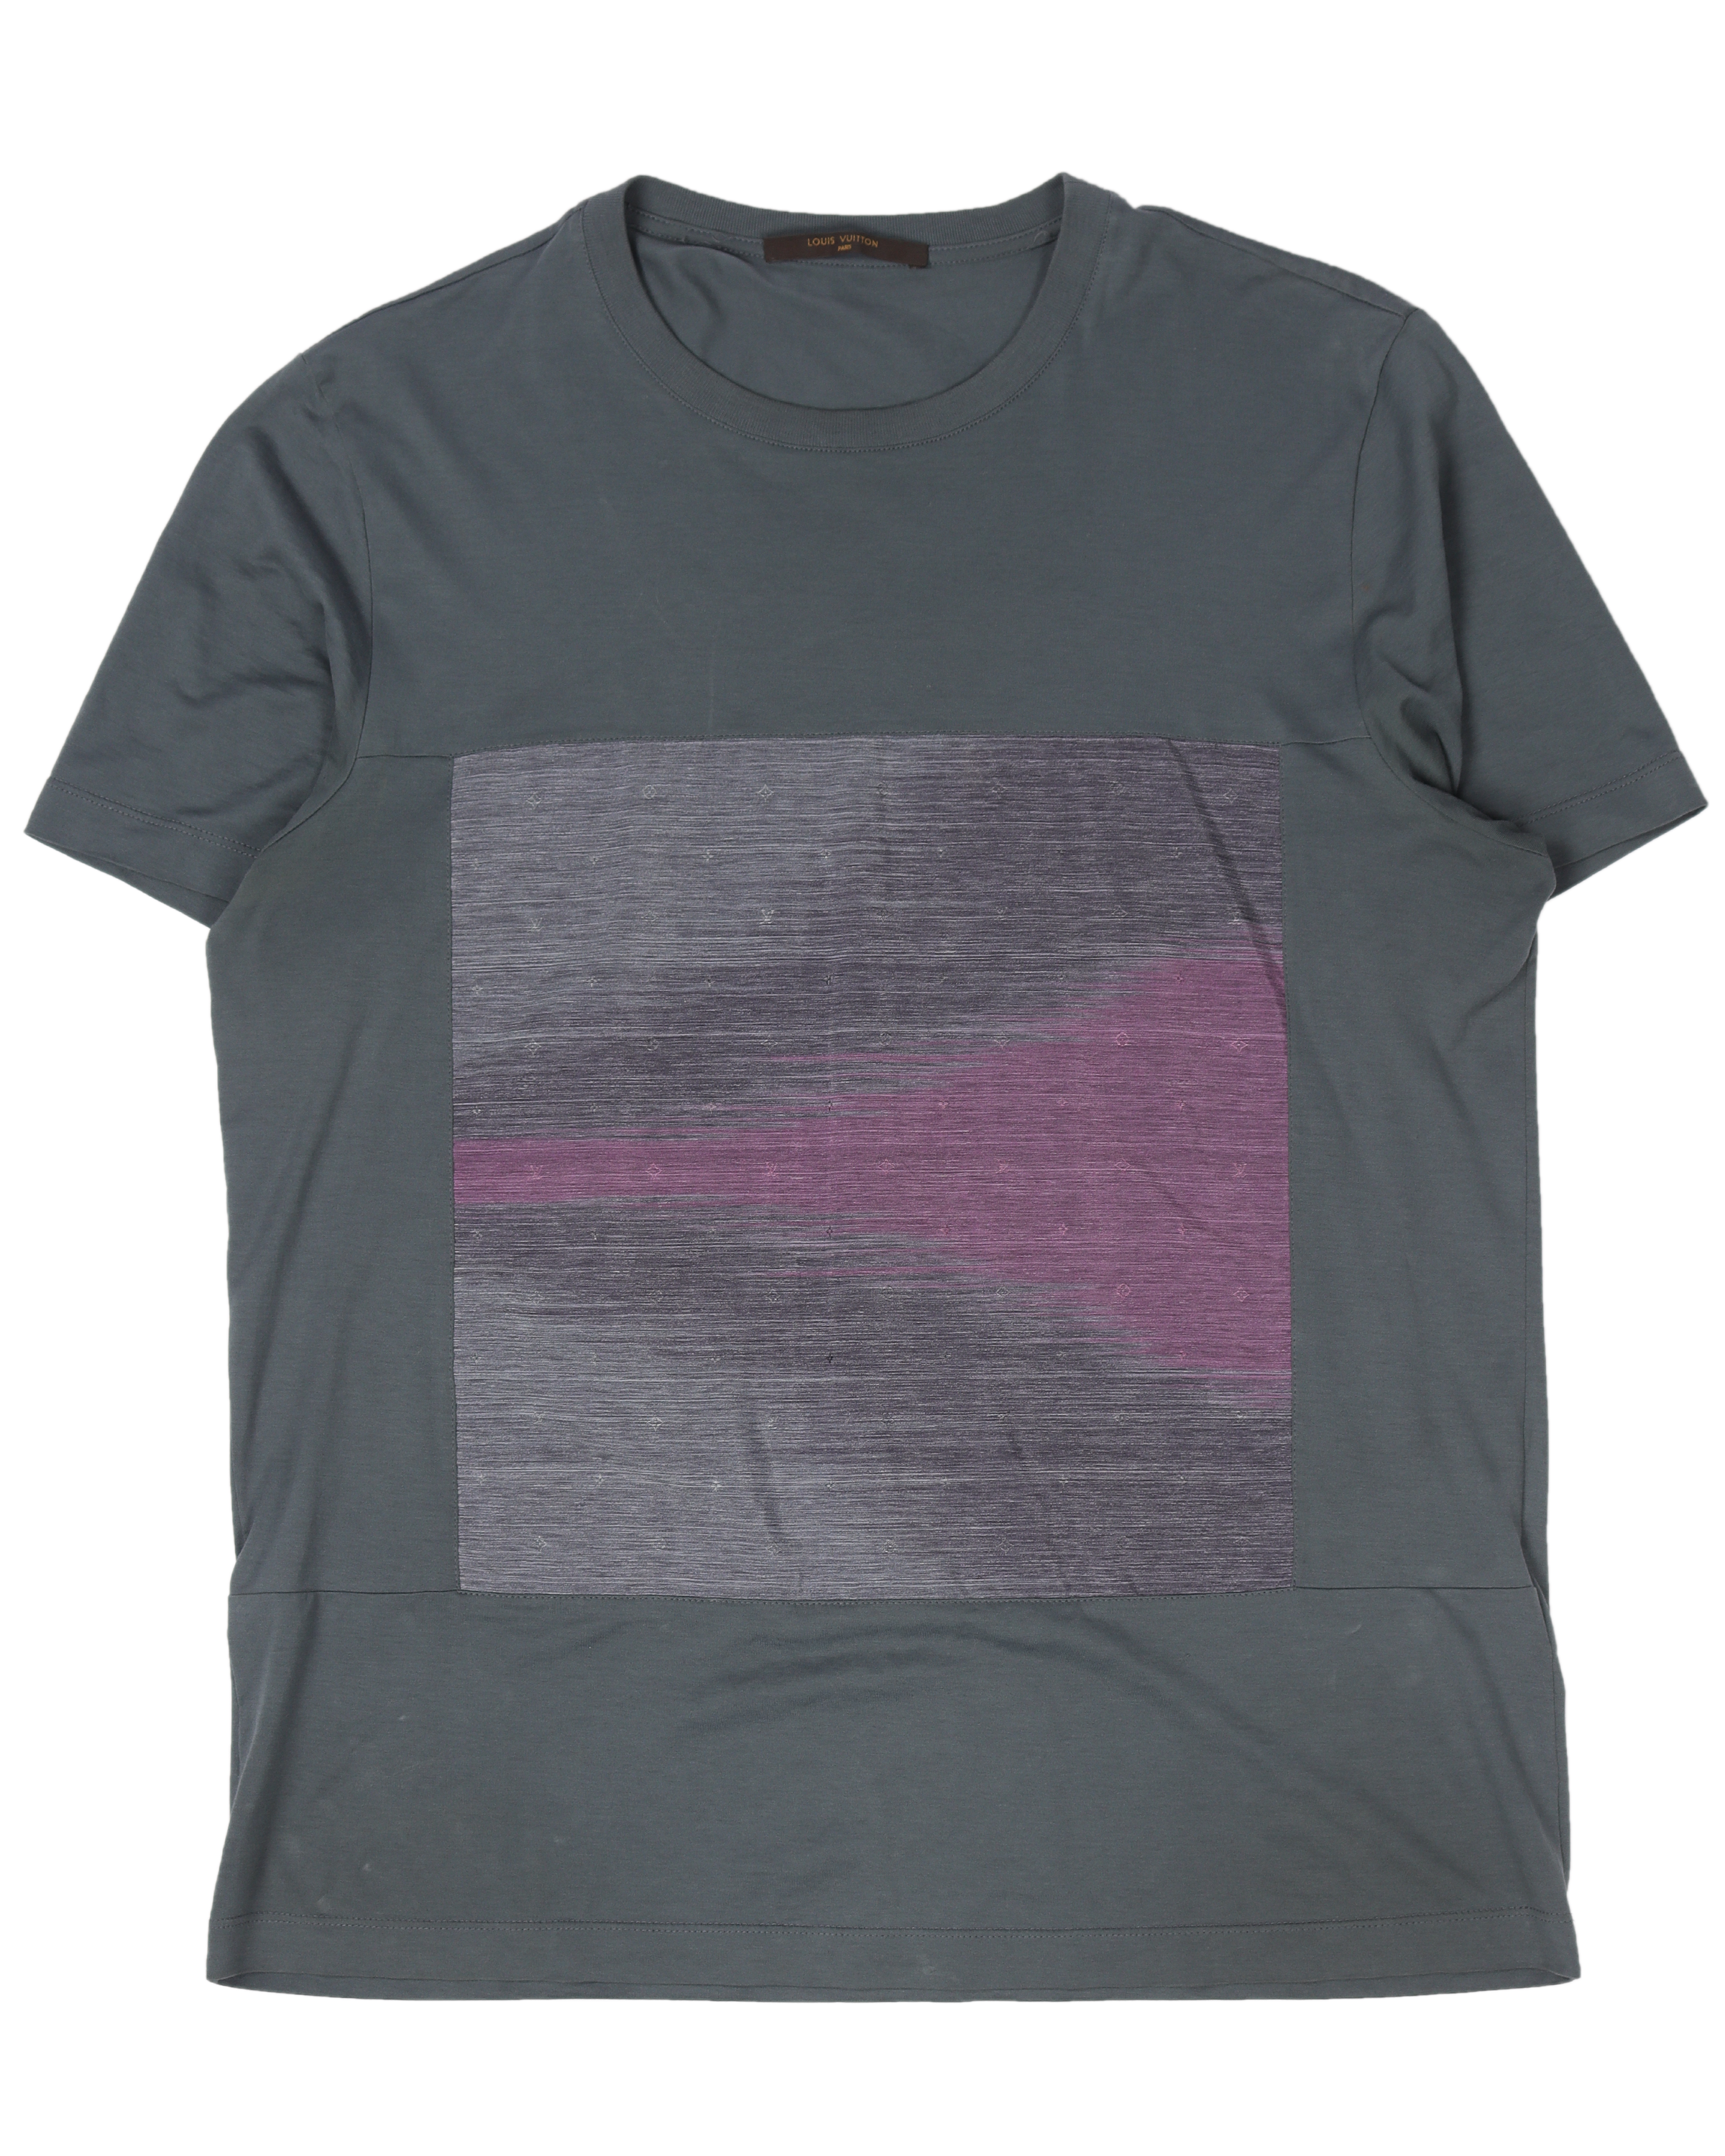 LOUIS VUITTON (LV) Logo T-Shirt Casual Streetwear Graphic Tee Baju